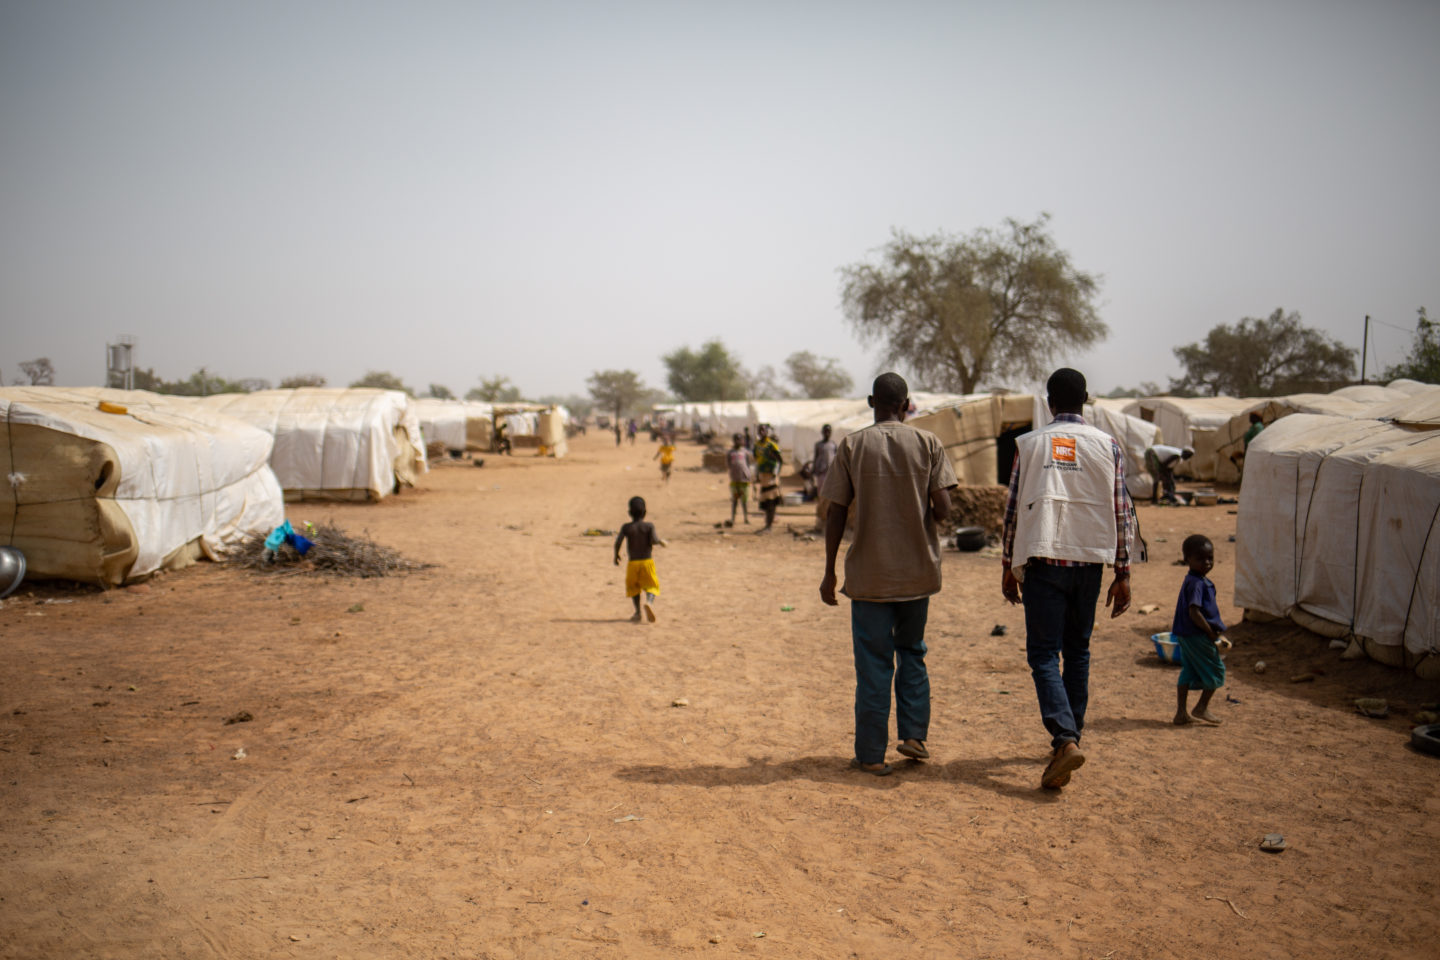 Camp for those fleeing Burkina Faso violence